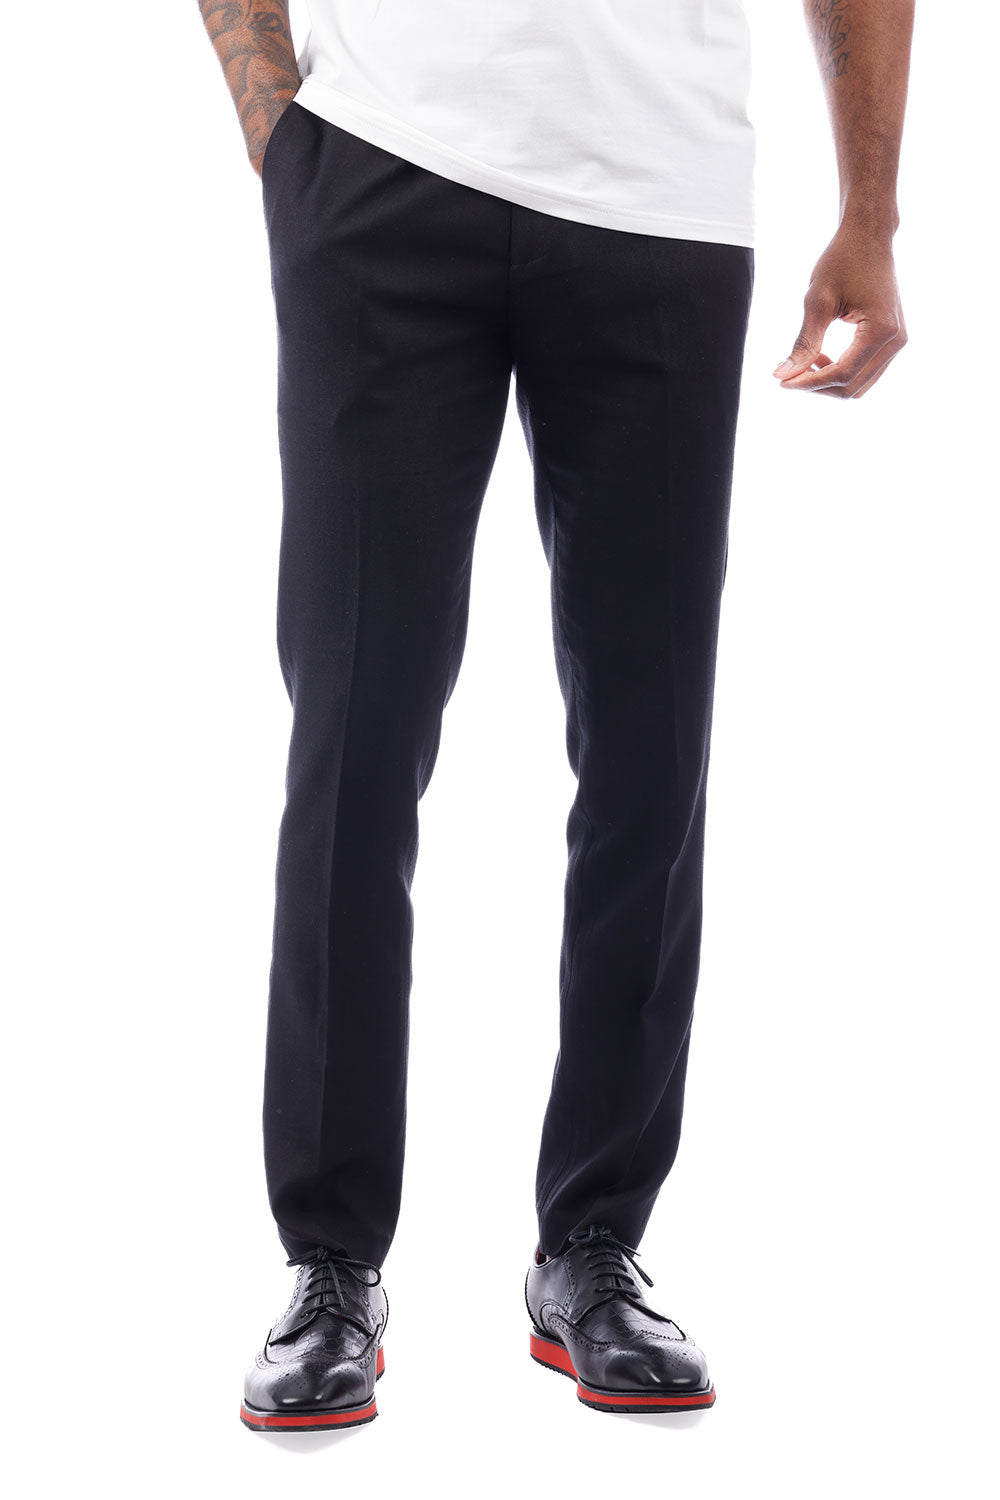 Barabas Men's Adjustable Waistband Drawstring Linen Pants 4CP30 Black